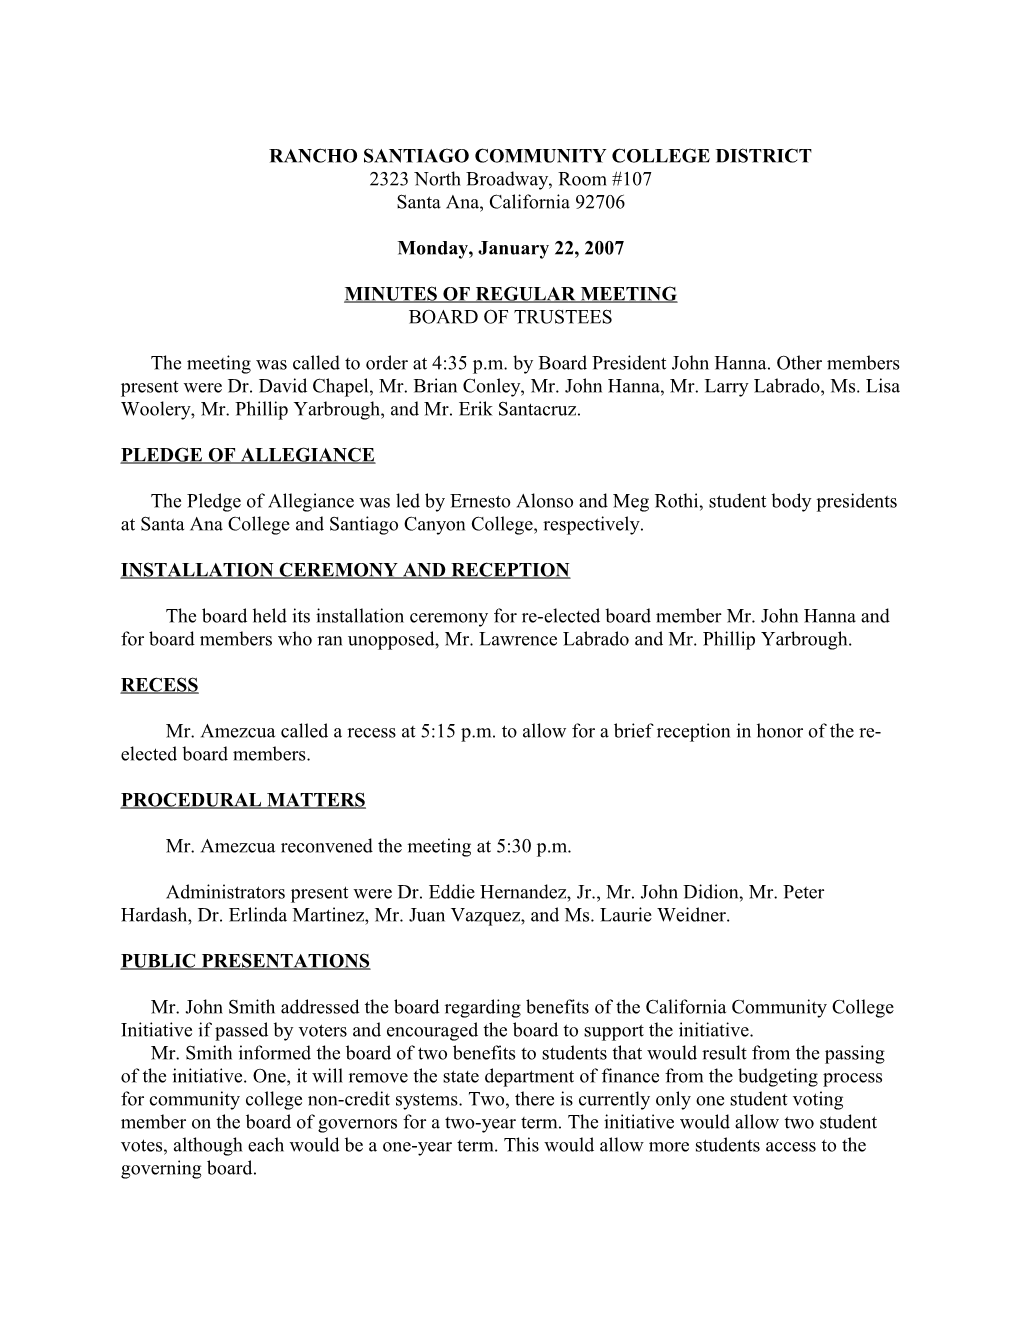 Minutes from December 11, 2006 Regular Meeting